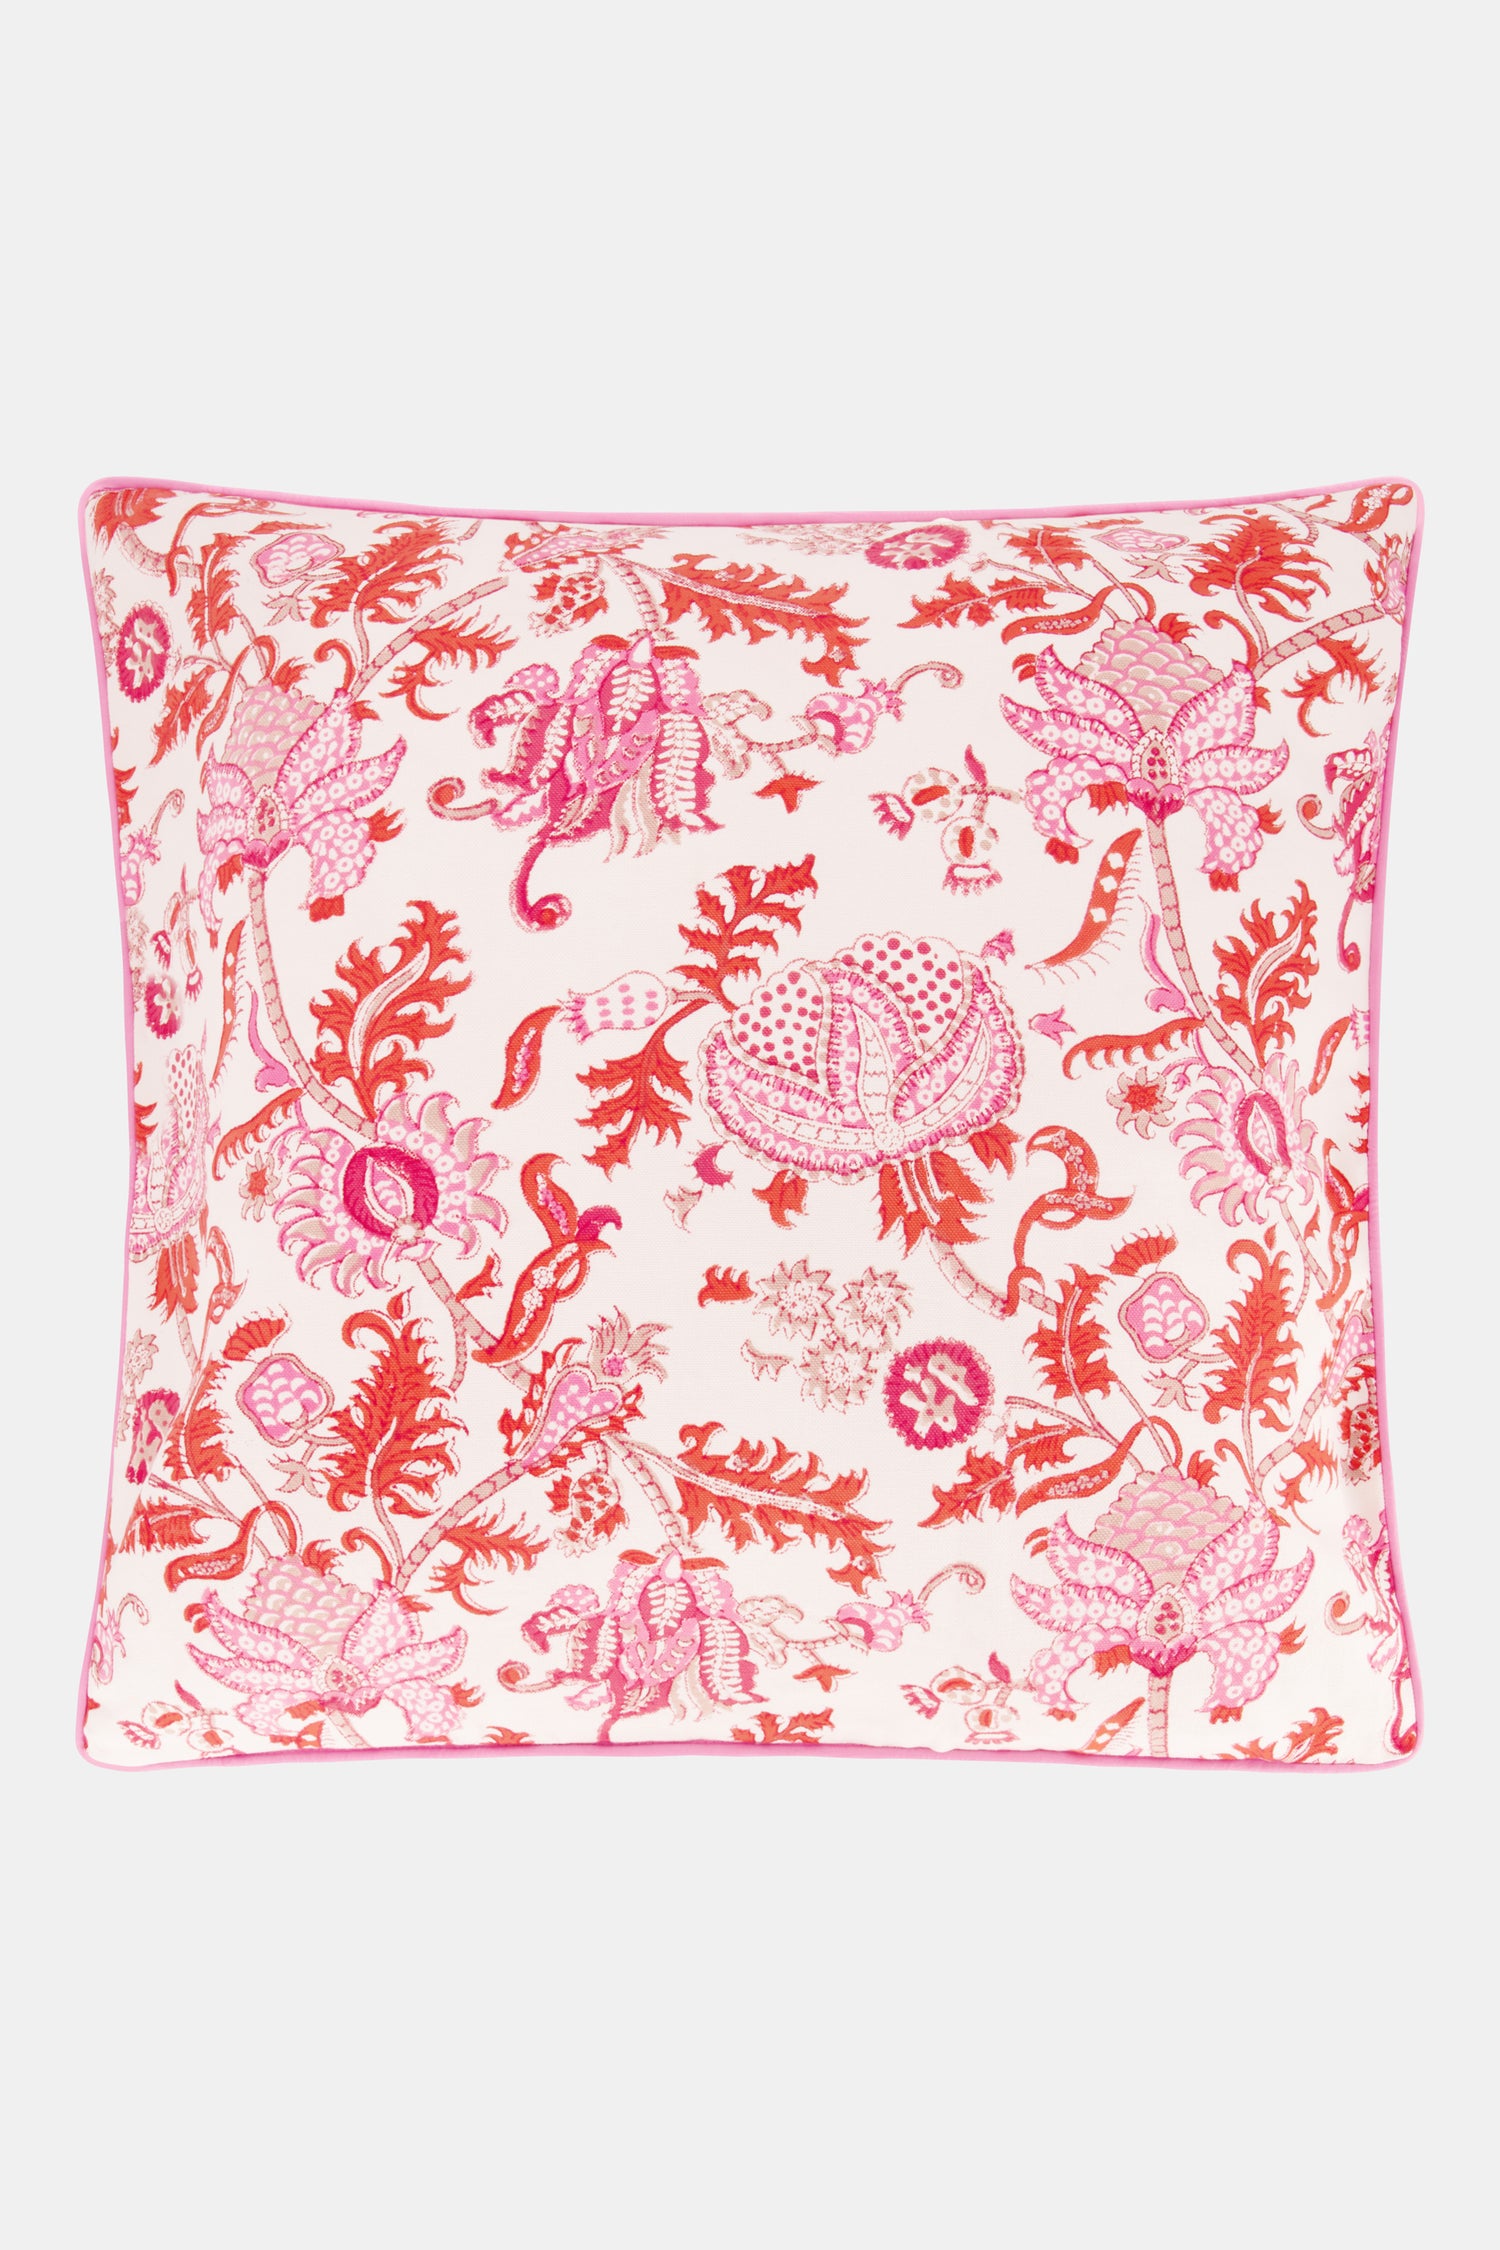 Roller Rabbit Big Cata Decorative Pillow Cover, 18 x 18